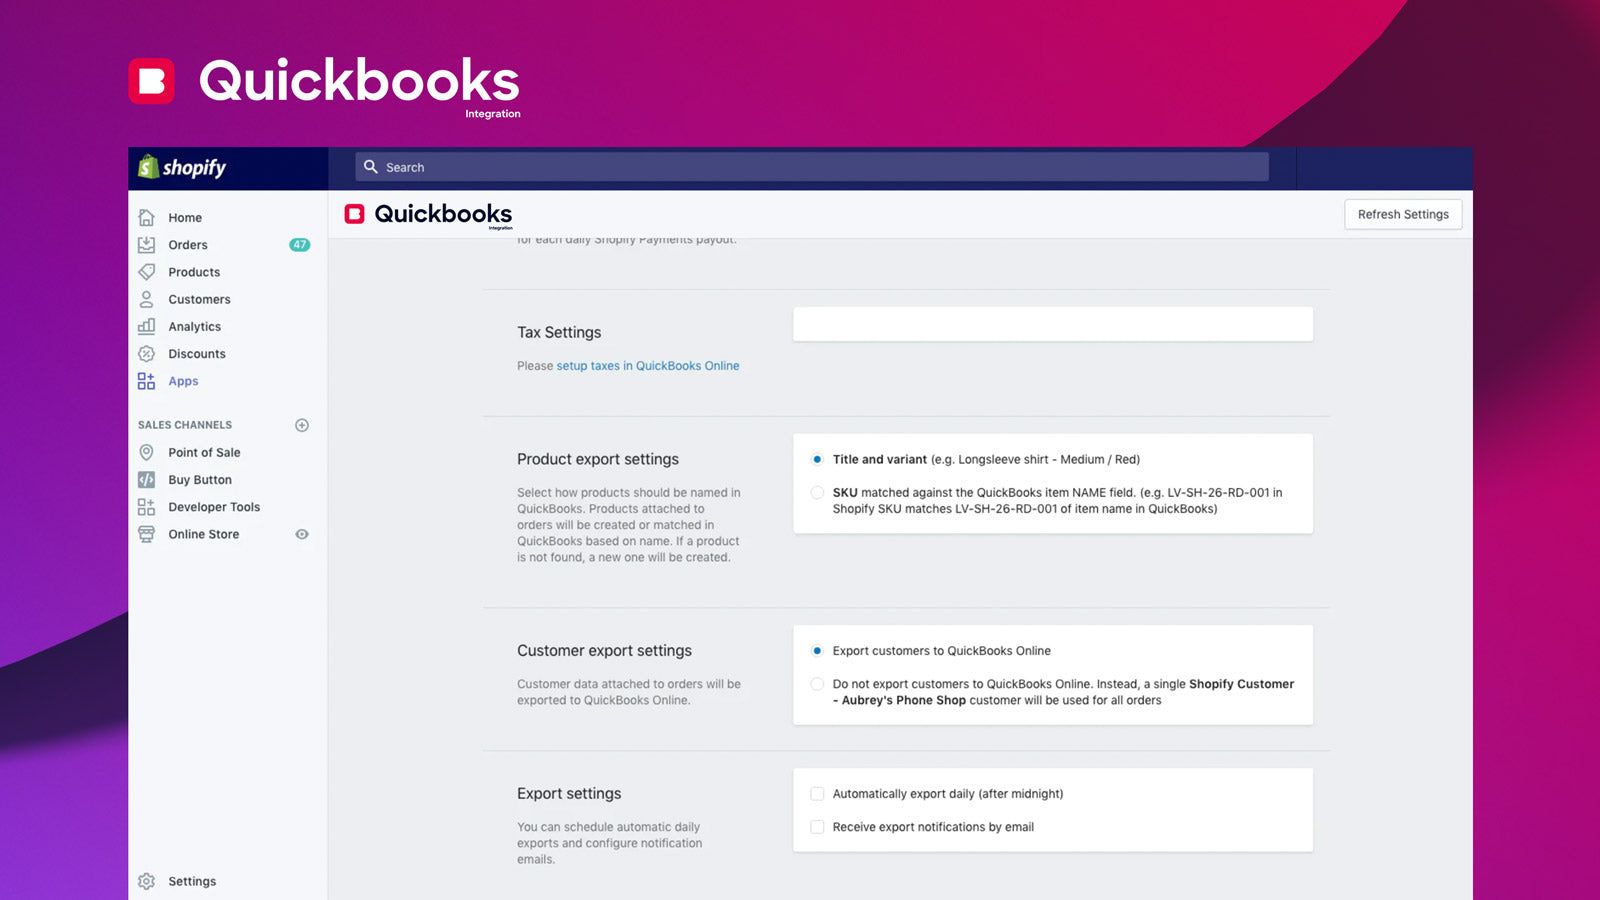 Additional Quickbooks Account Settings